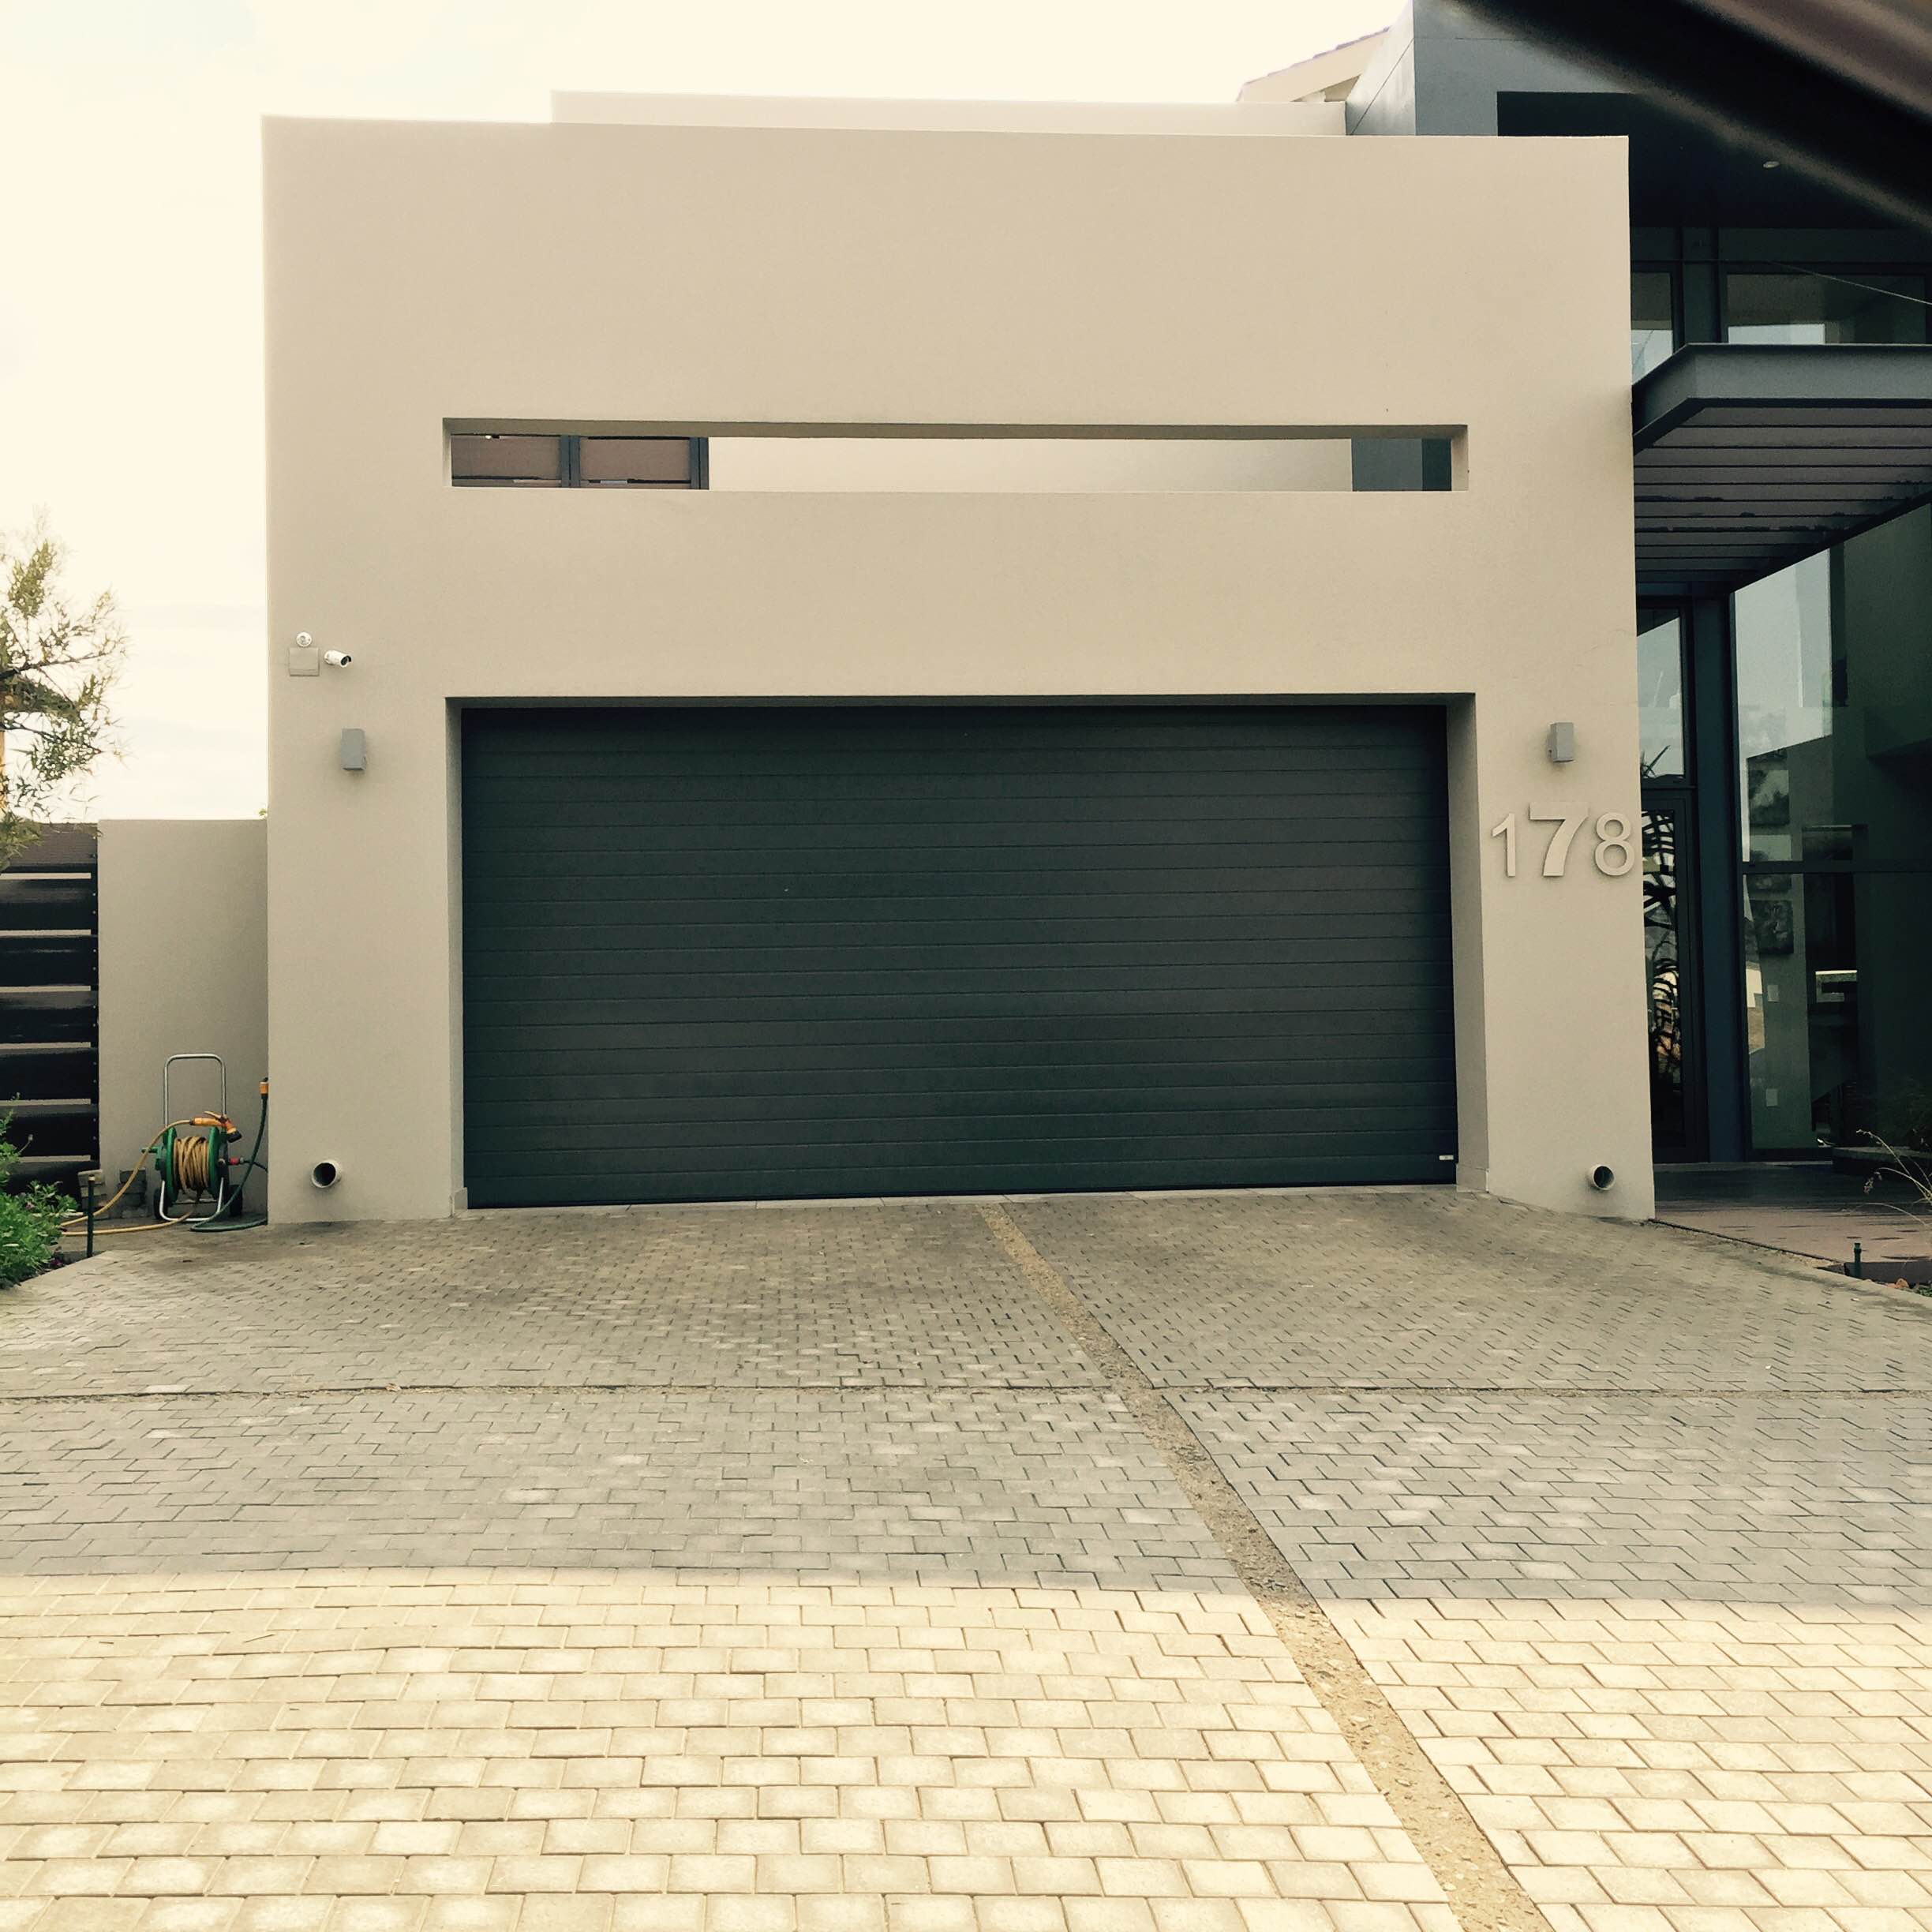 Unique Garage Door Job for Simple Design